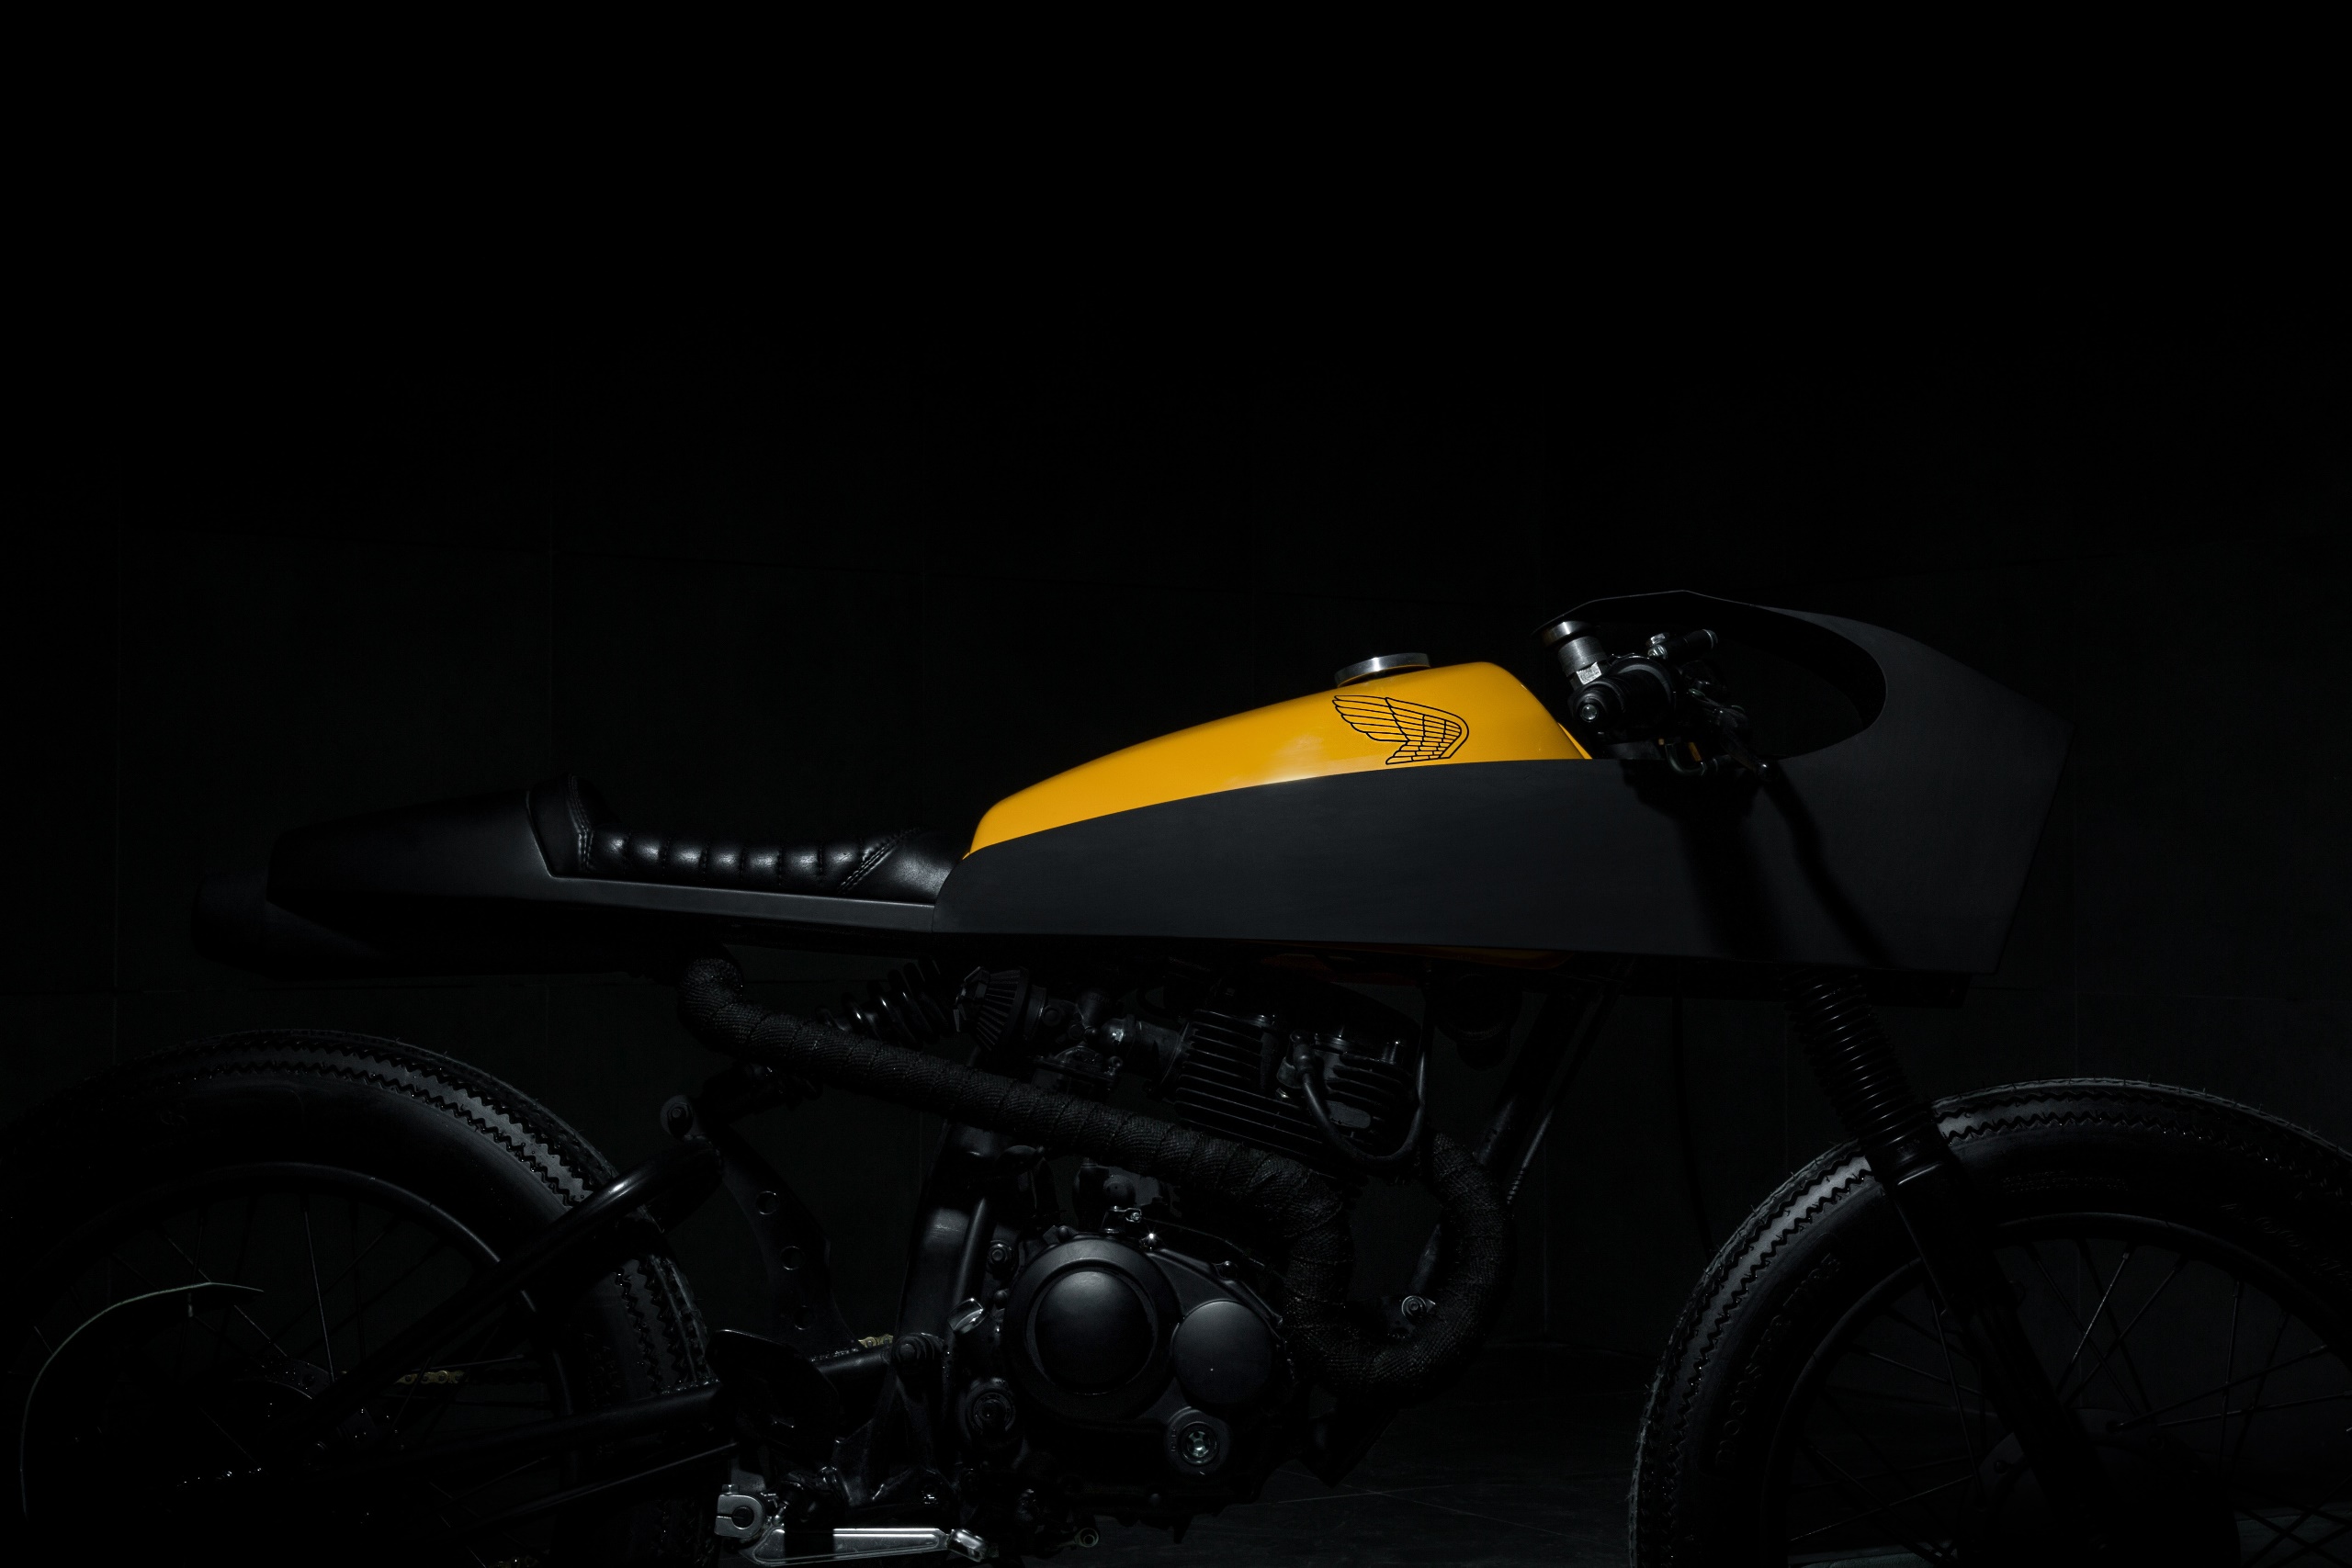 General 2560x1707 dark simple background black background vehicle motorcycle Honda Japanese motorcycles